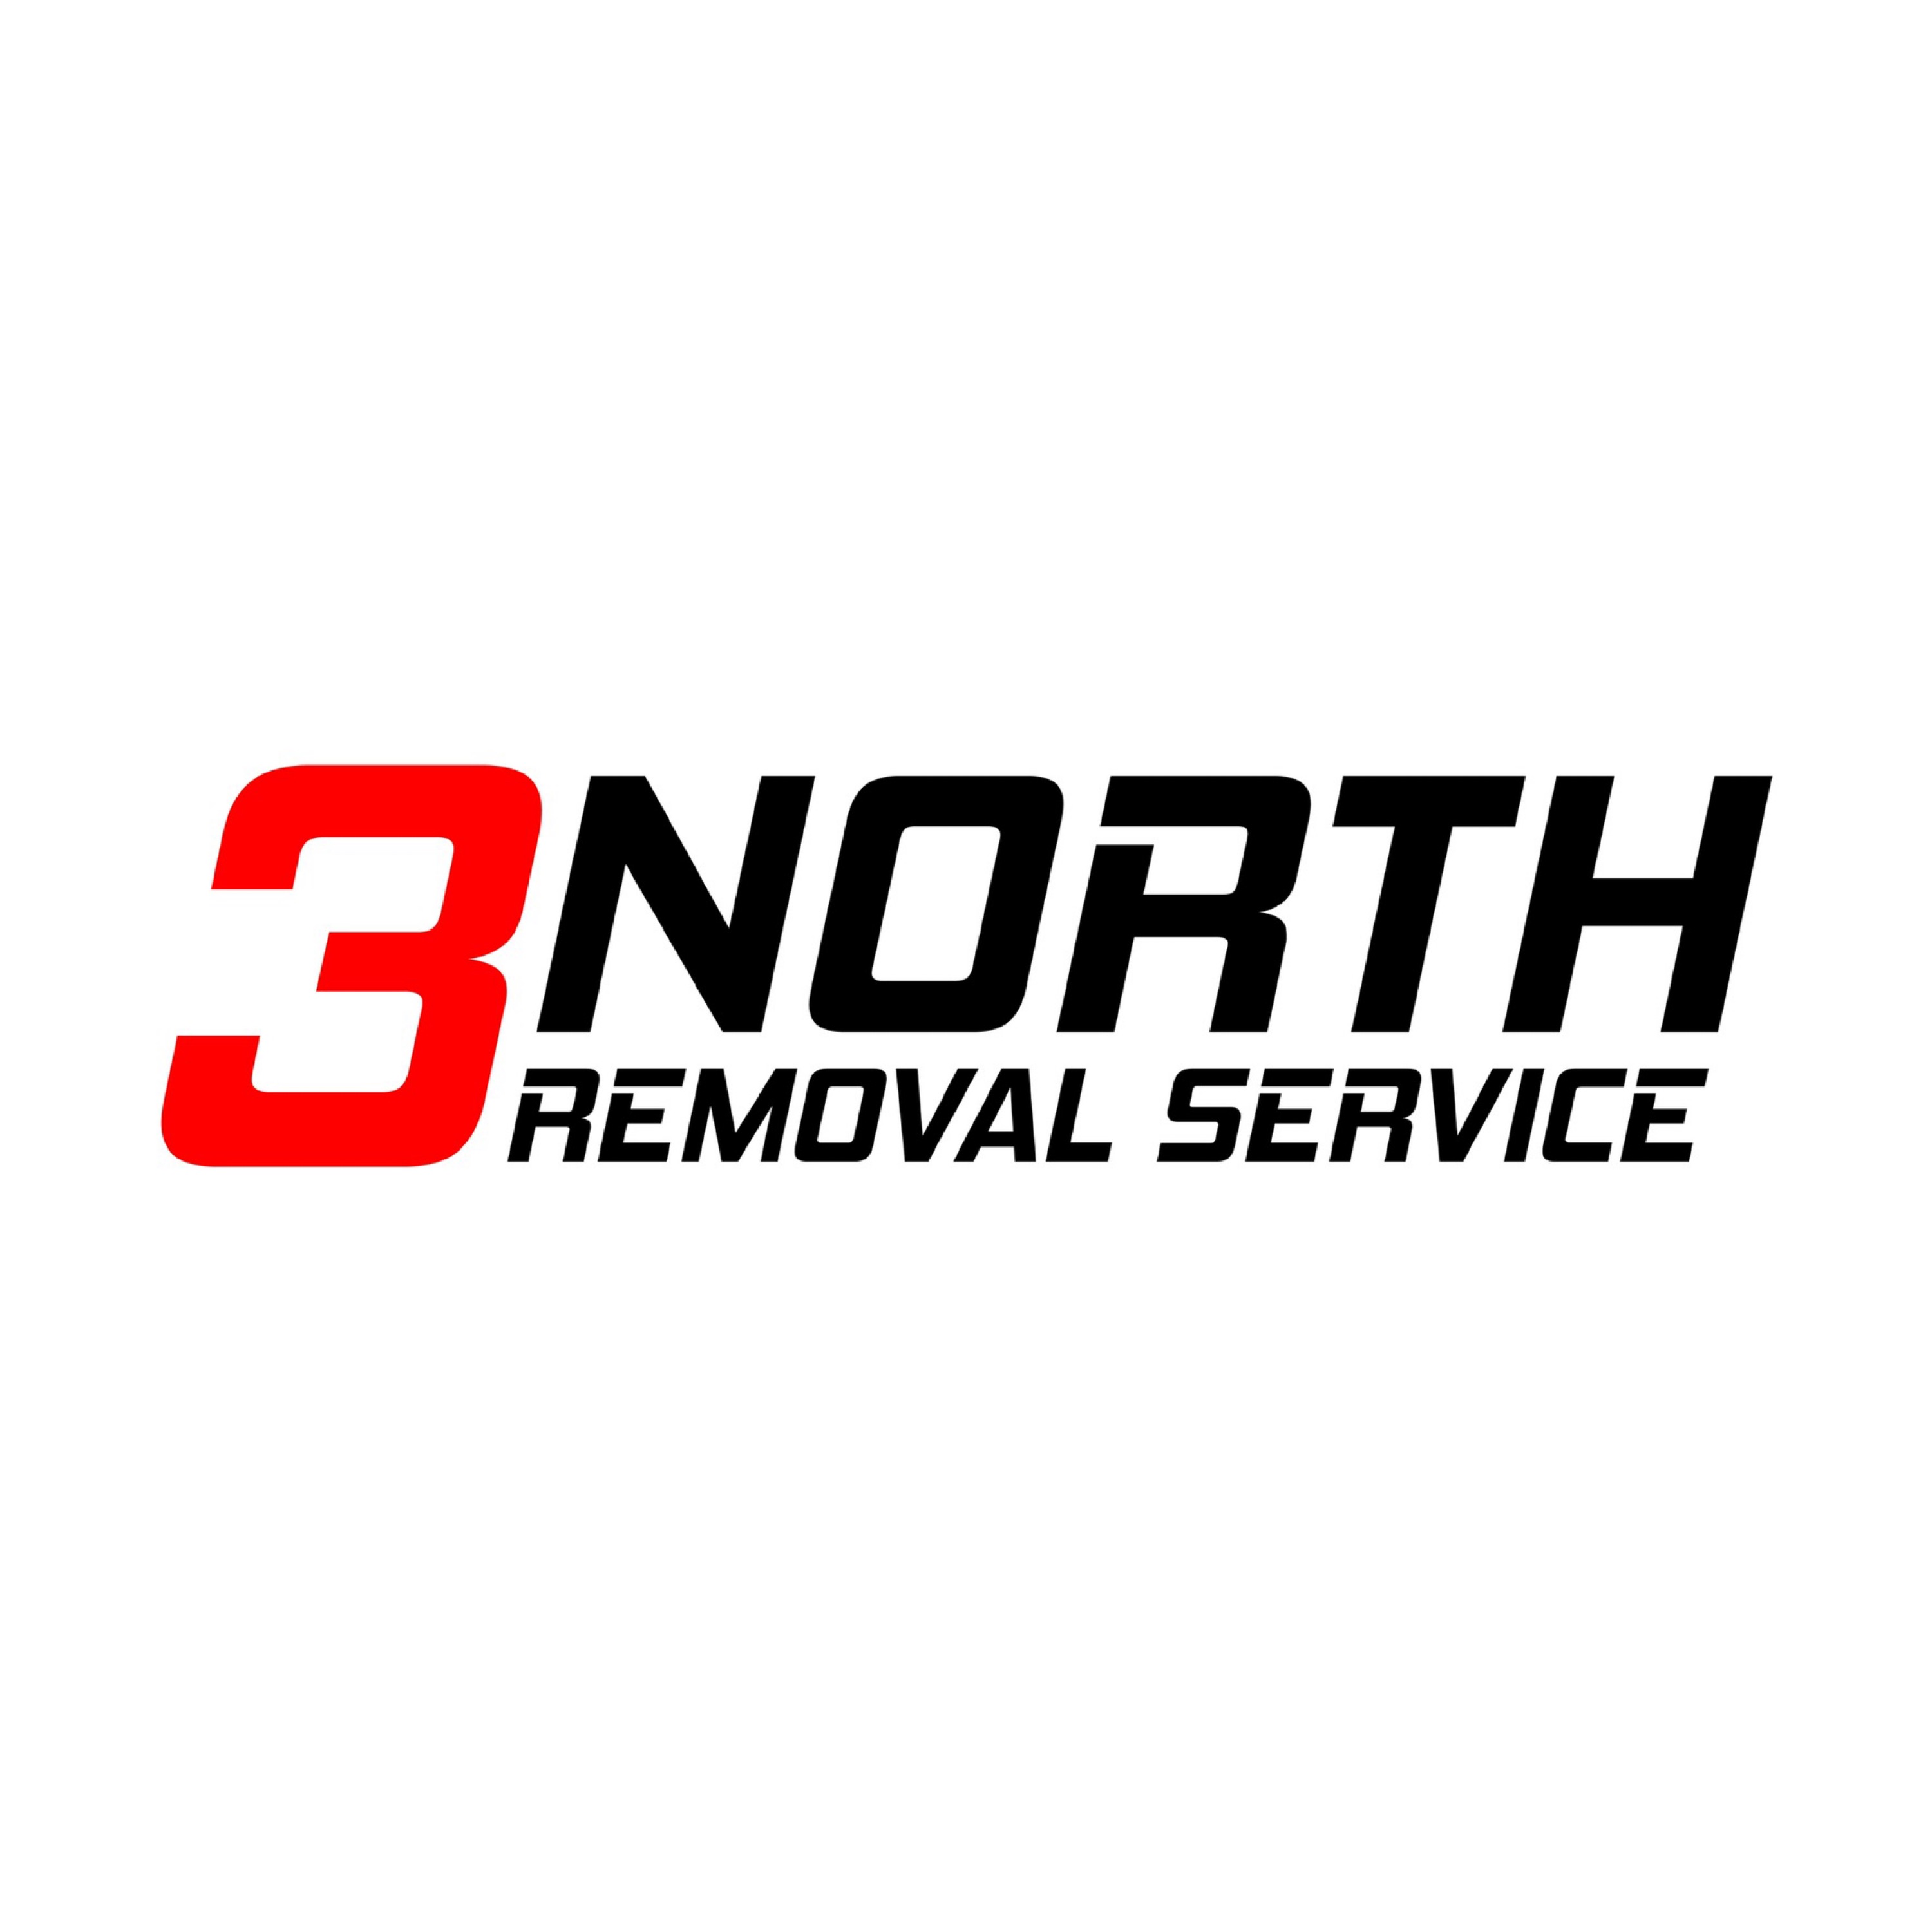 3 North Removal Service Logo